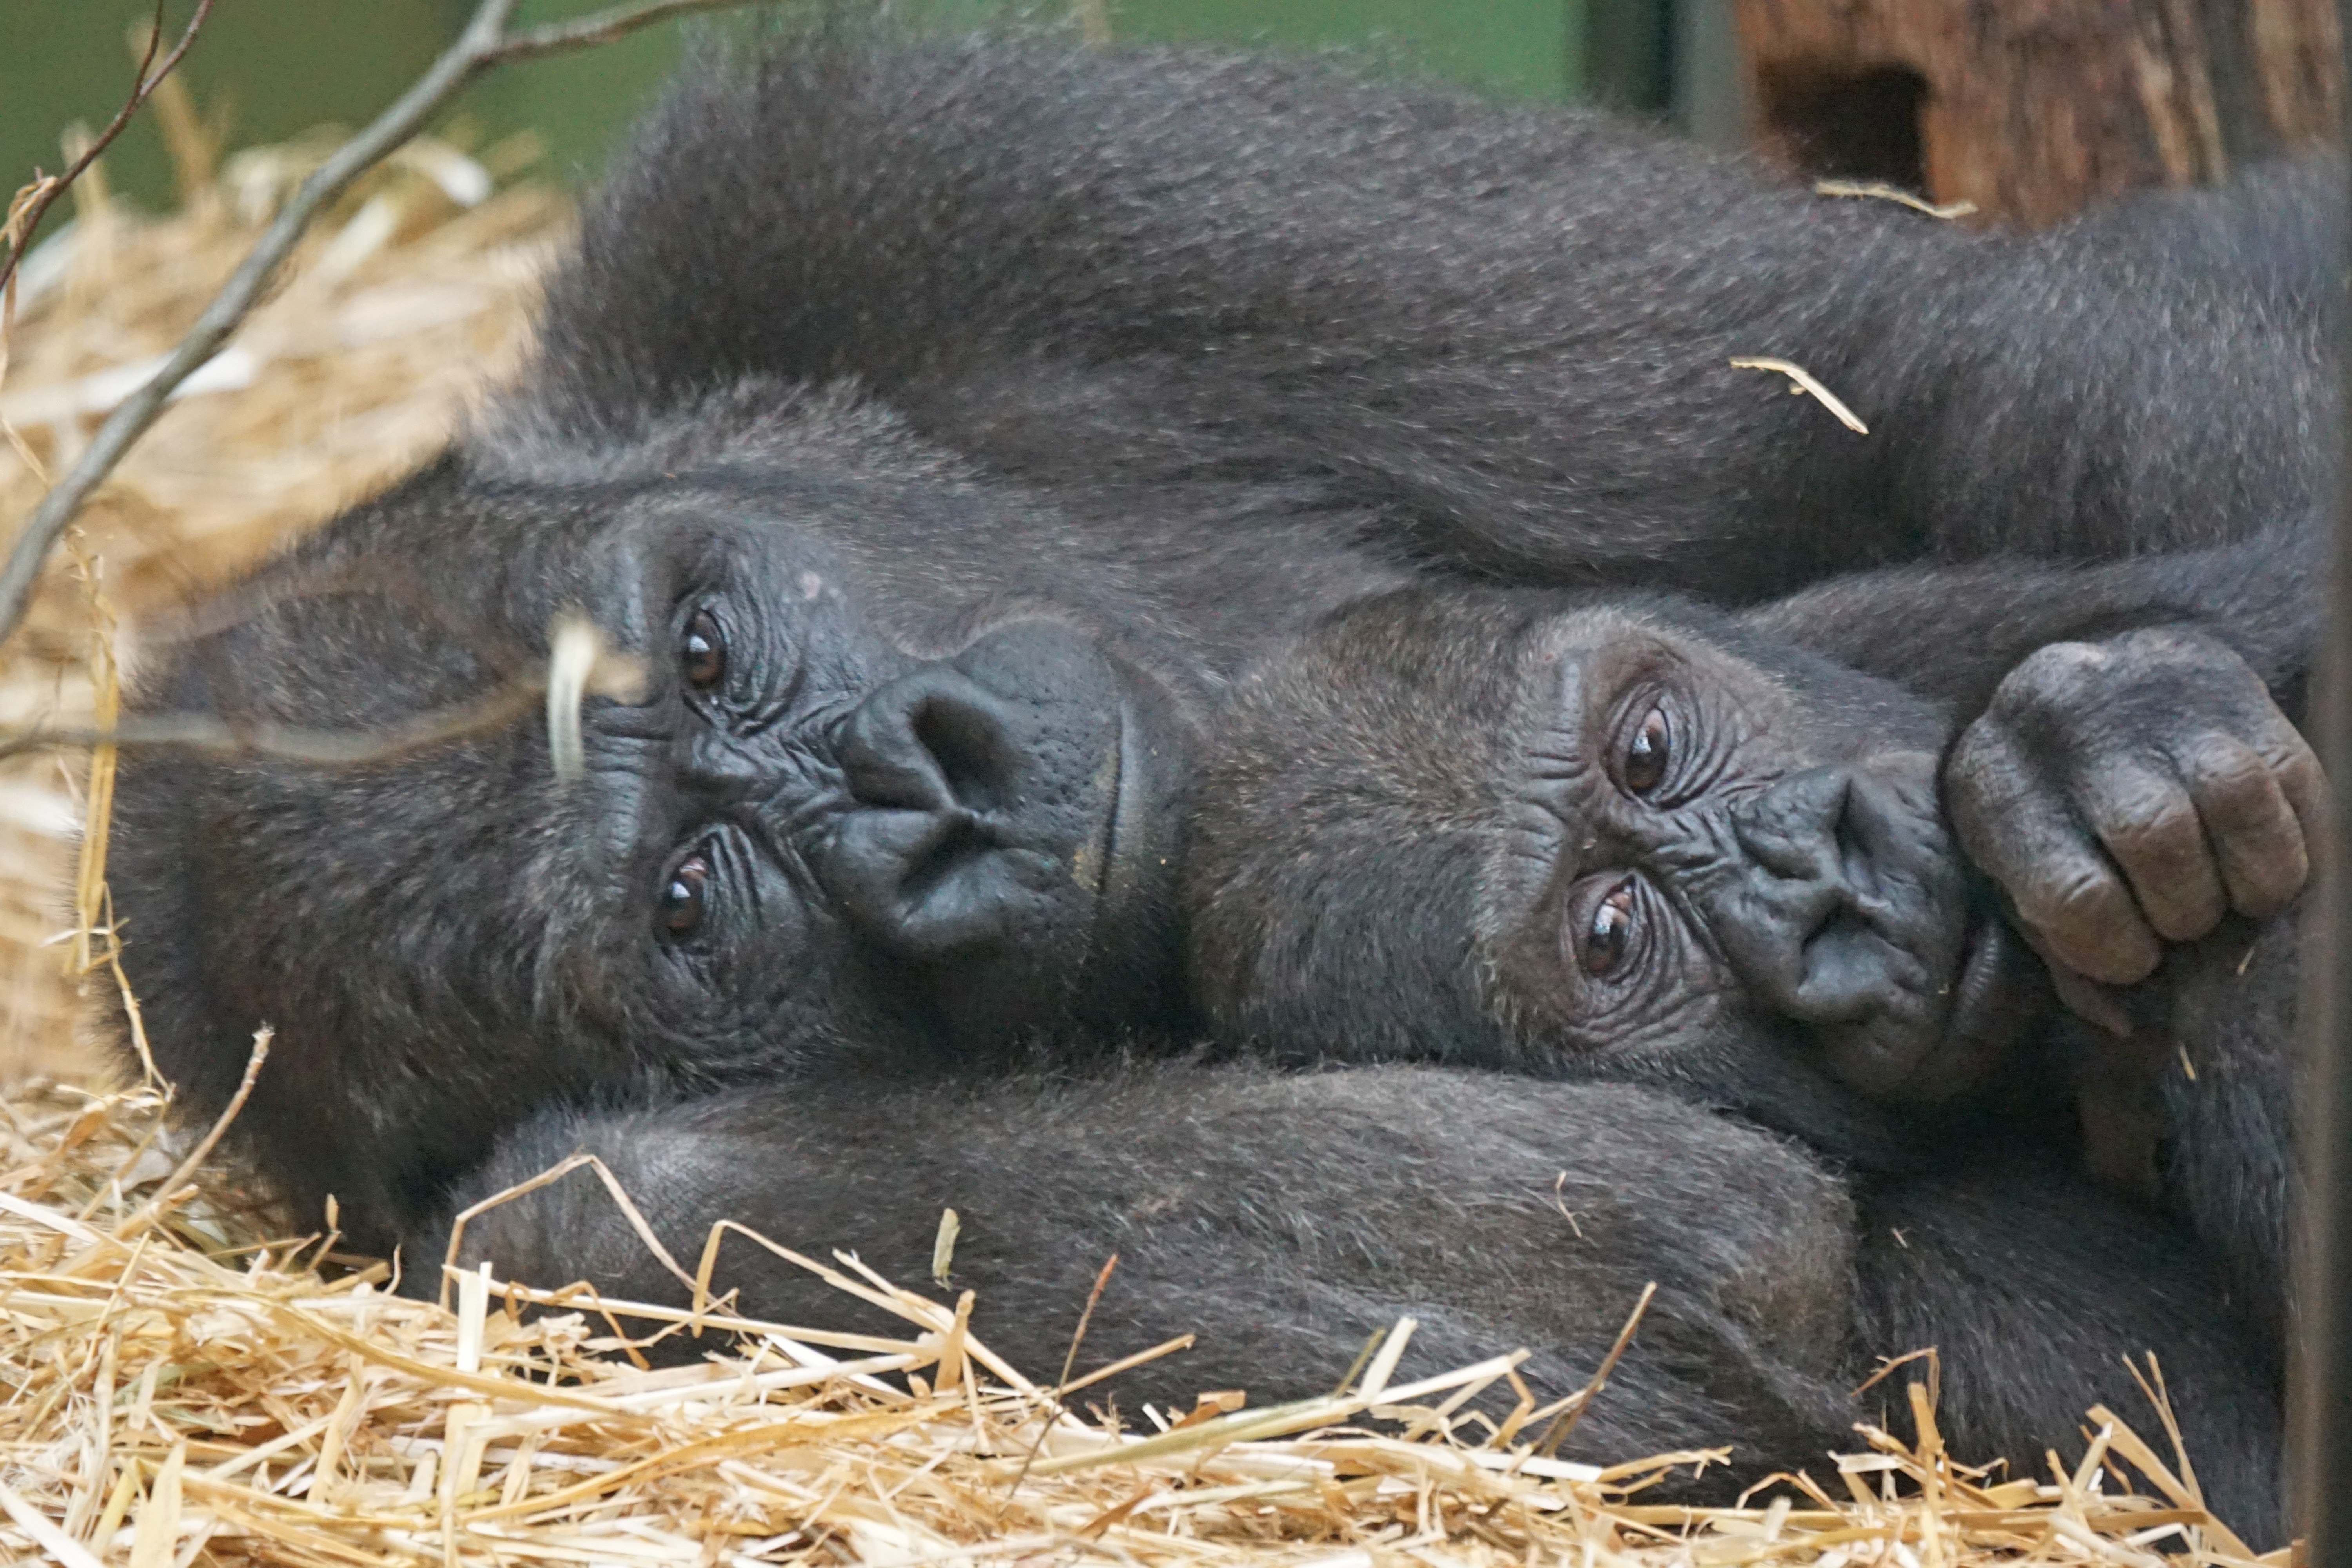 grey gorilla lying on brown hay